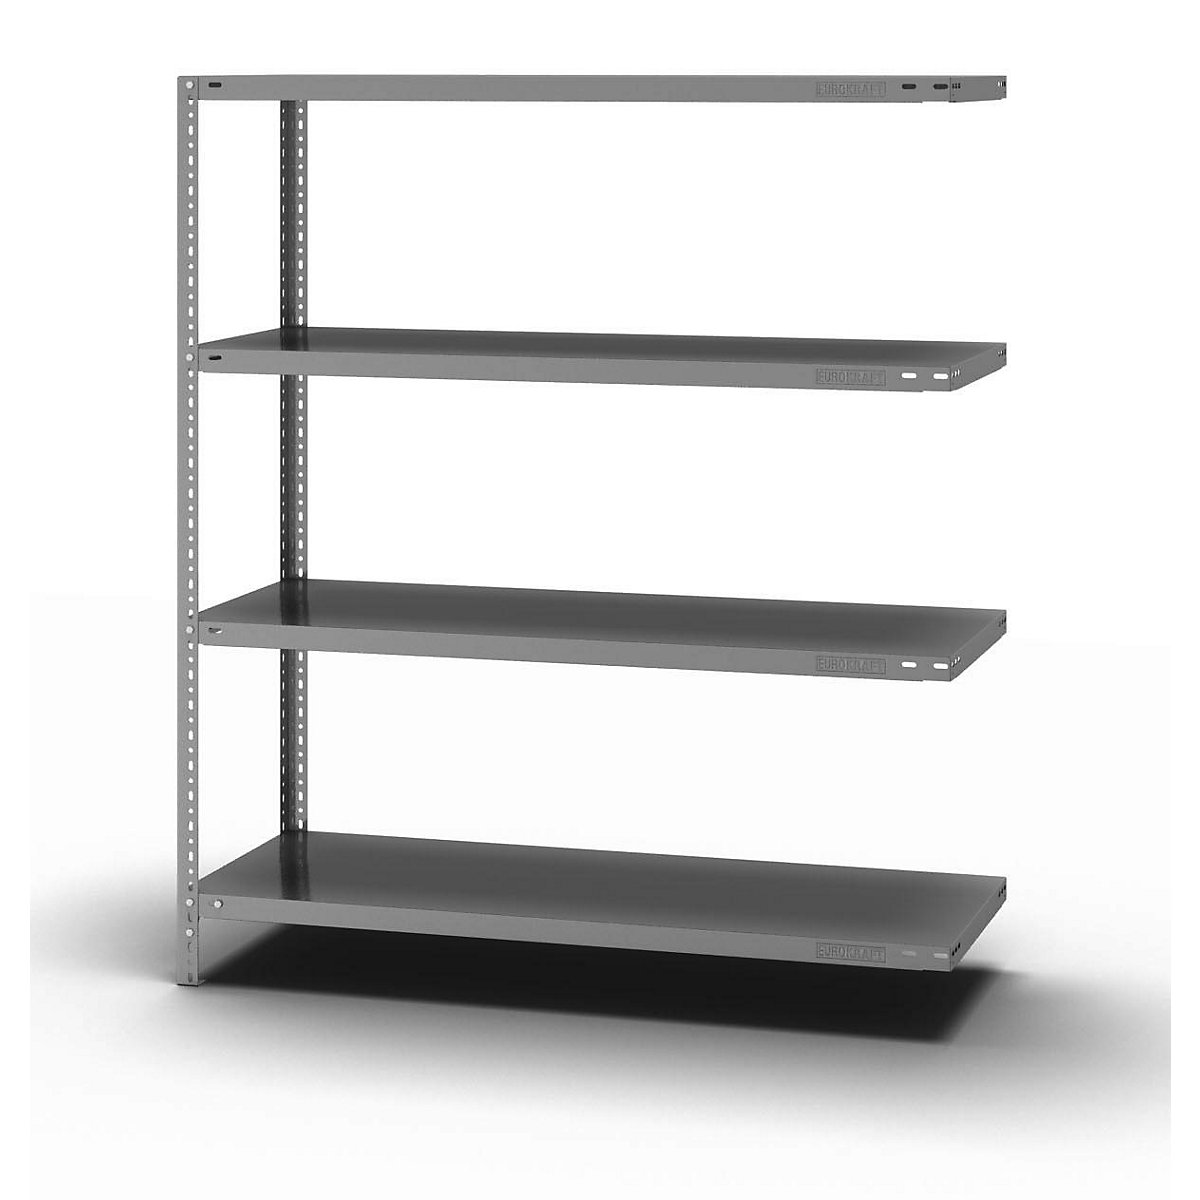 Bolt-together storage shelving, zinc plated, medium duty – eurokraft pro, shelf unit height 1500 mm, shelf width 1300 mm, depth 500 mm, extension shelf unit-10